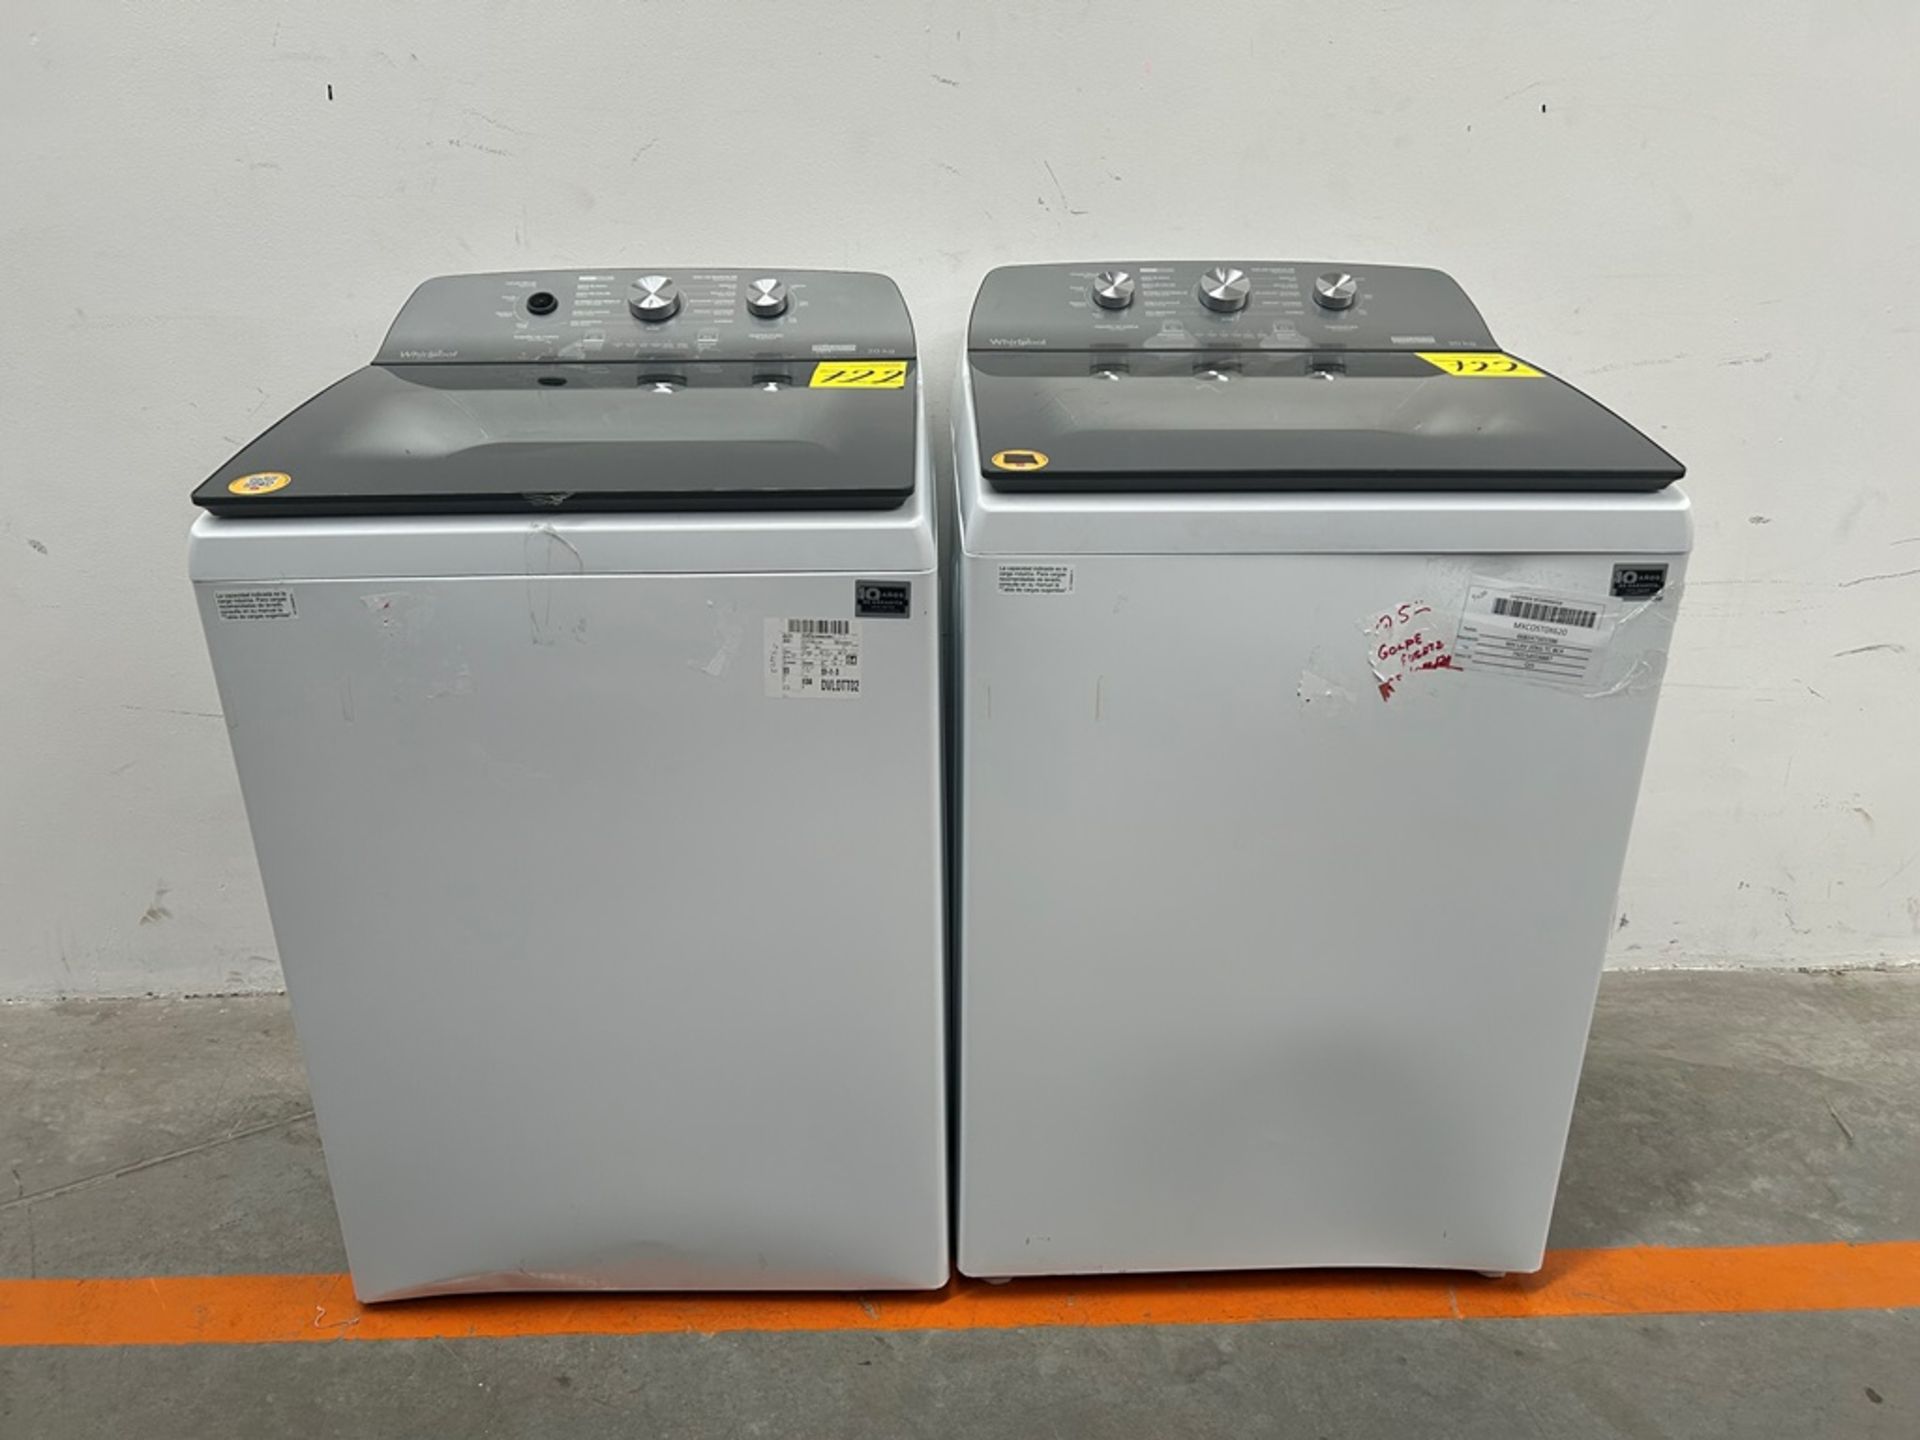 Lote de 2 lavadoras contiene: 1 Lavadora de 20 KG, Marca WHIRPOOL, Modelo 8MWTW2023WPM0, Serie 8270